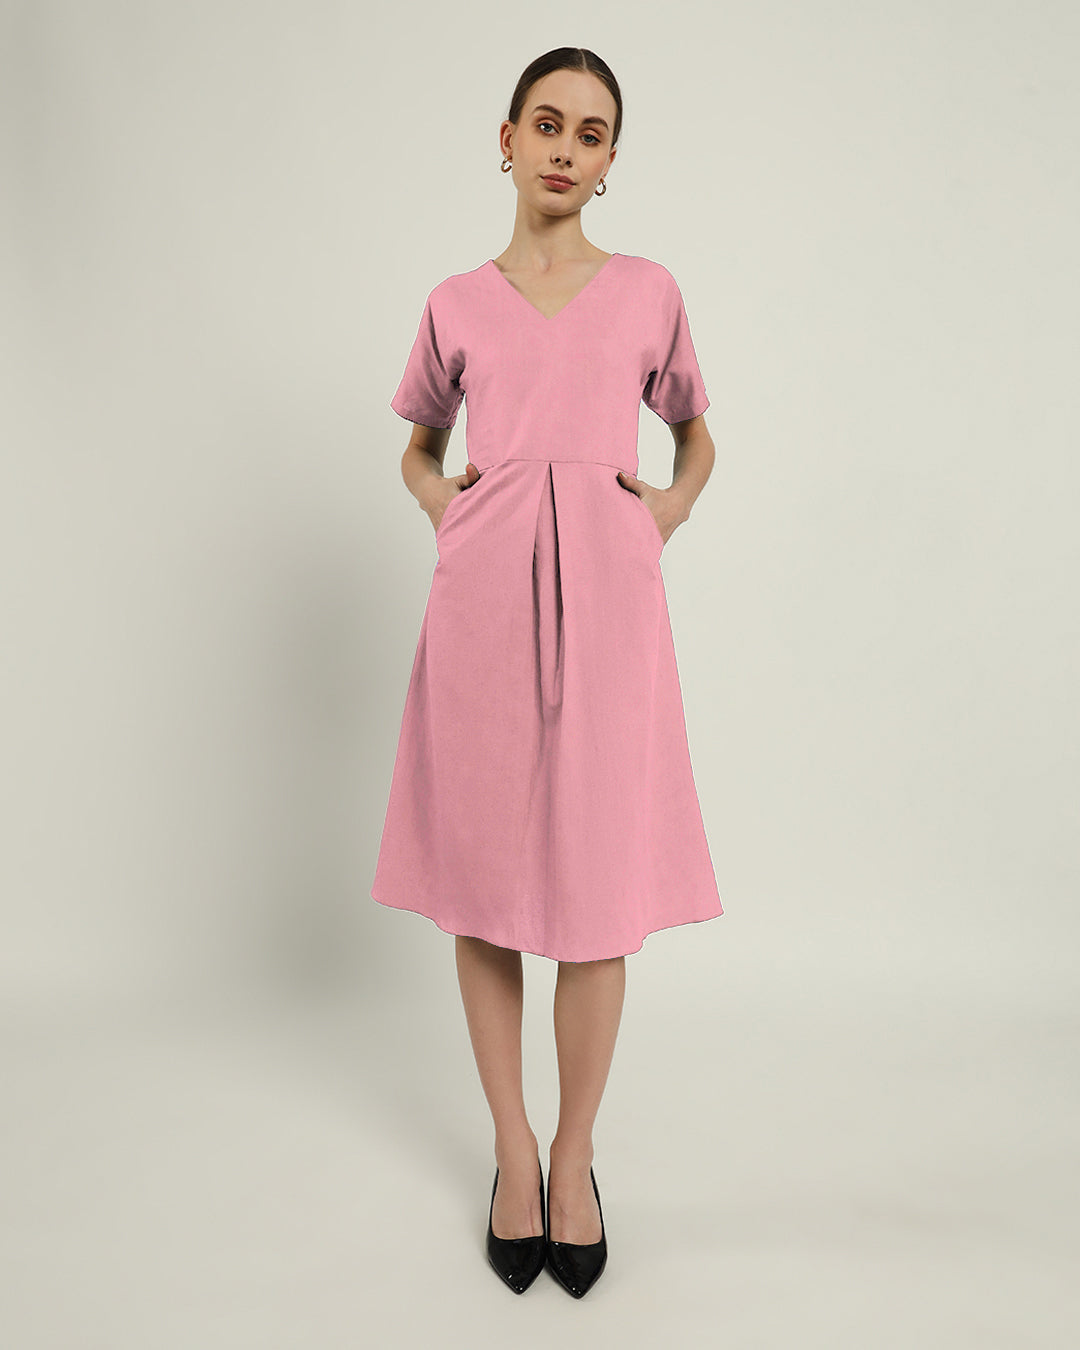 The Memphis Fondant Pink Dress